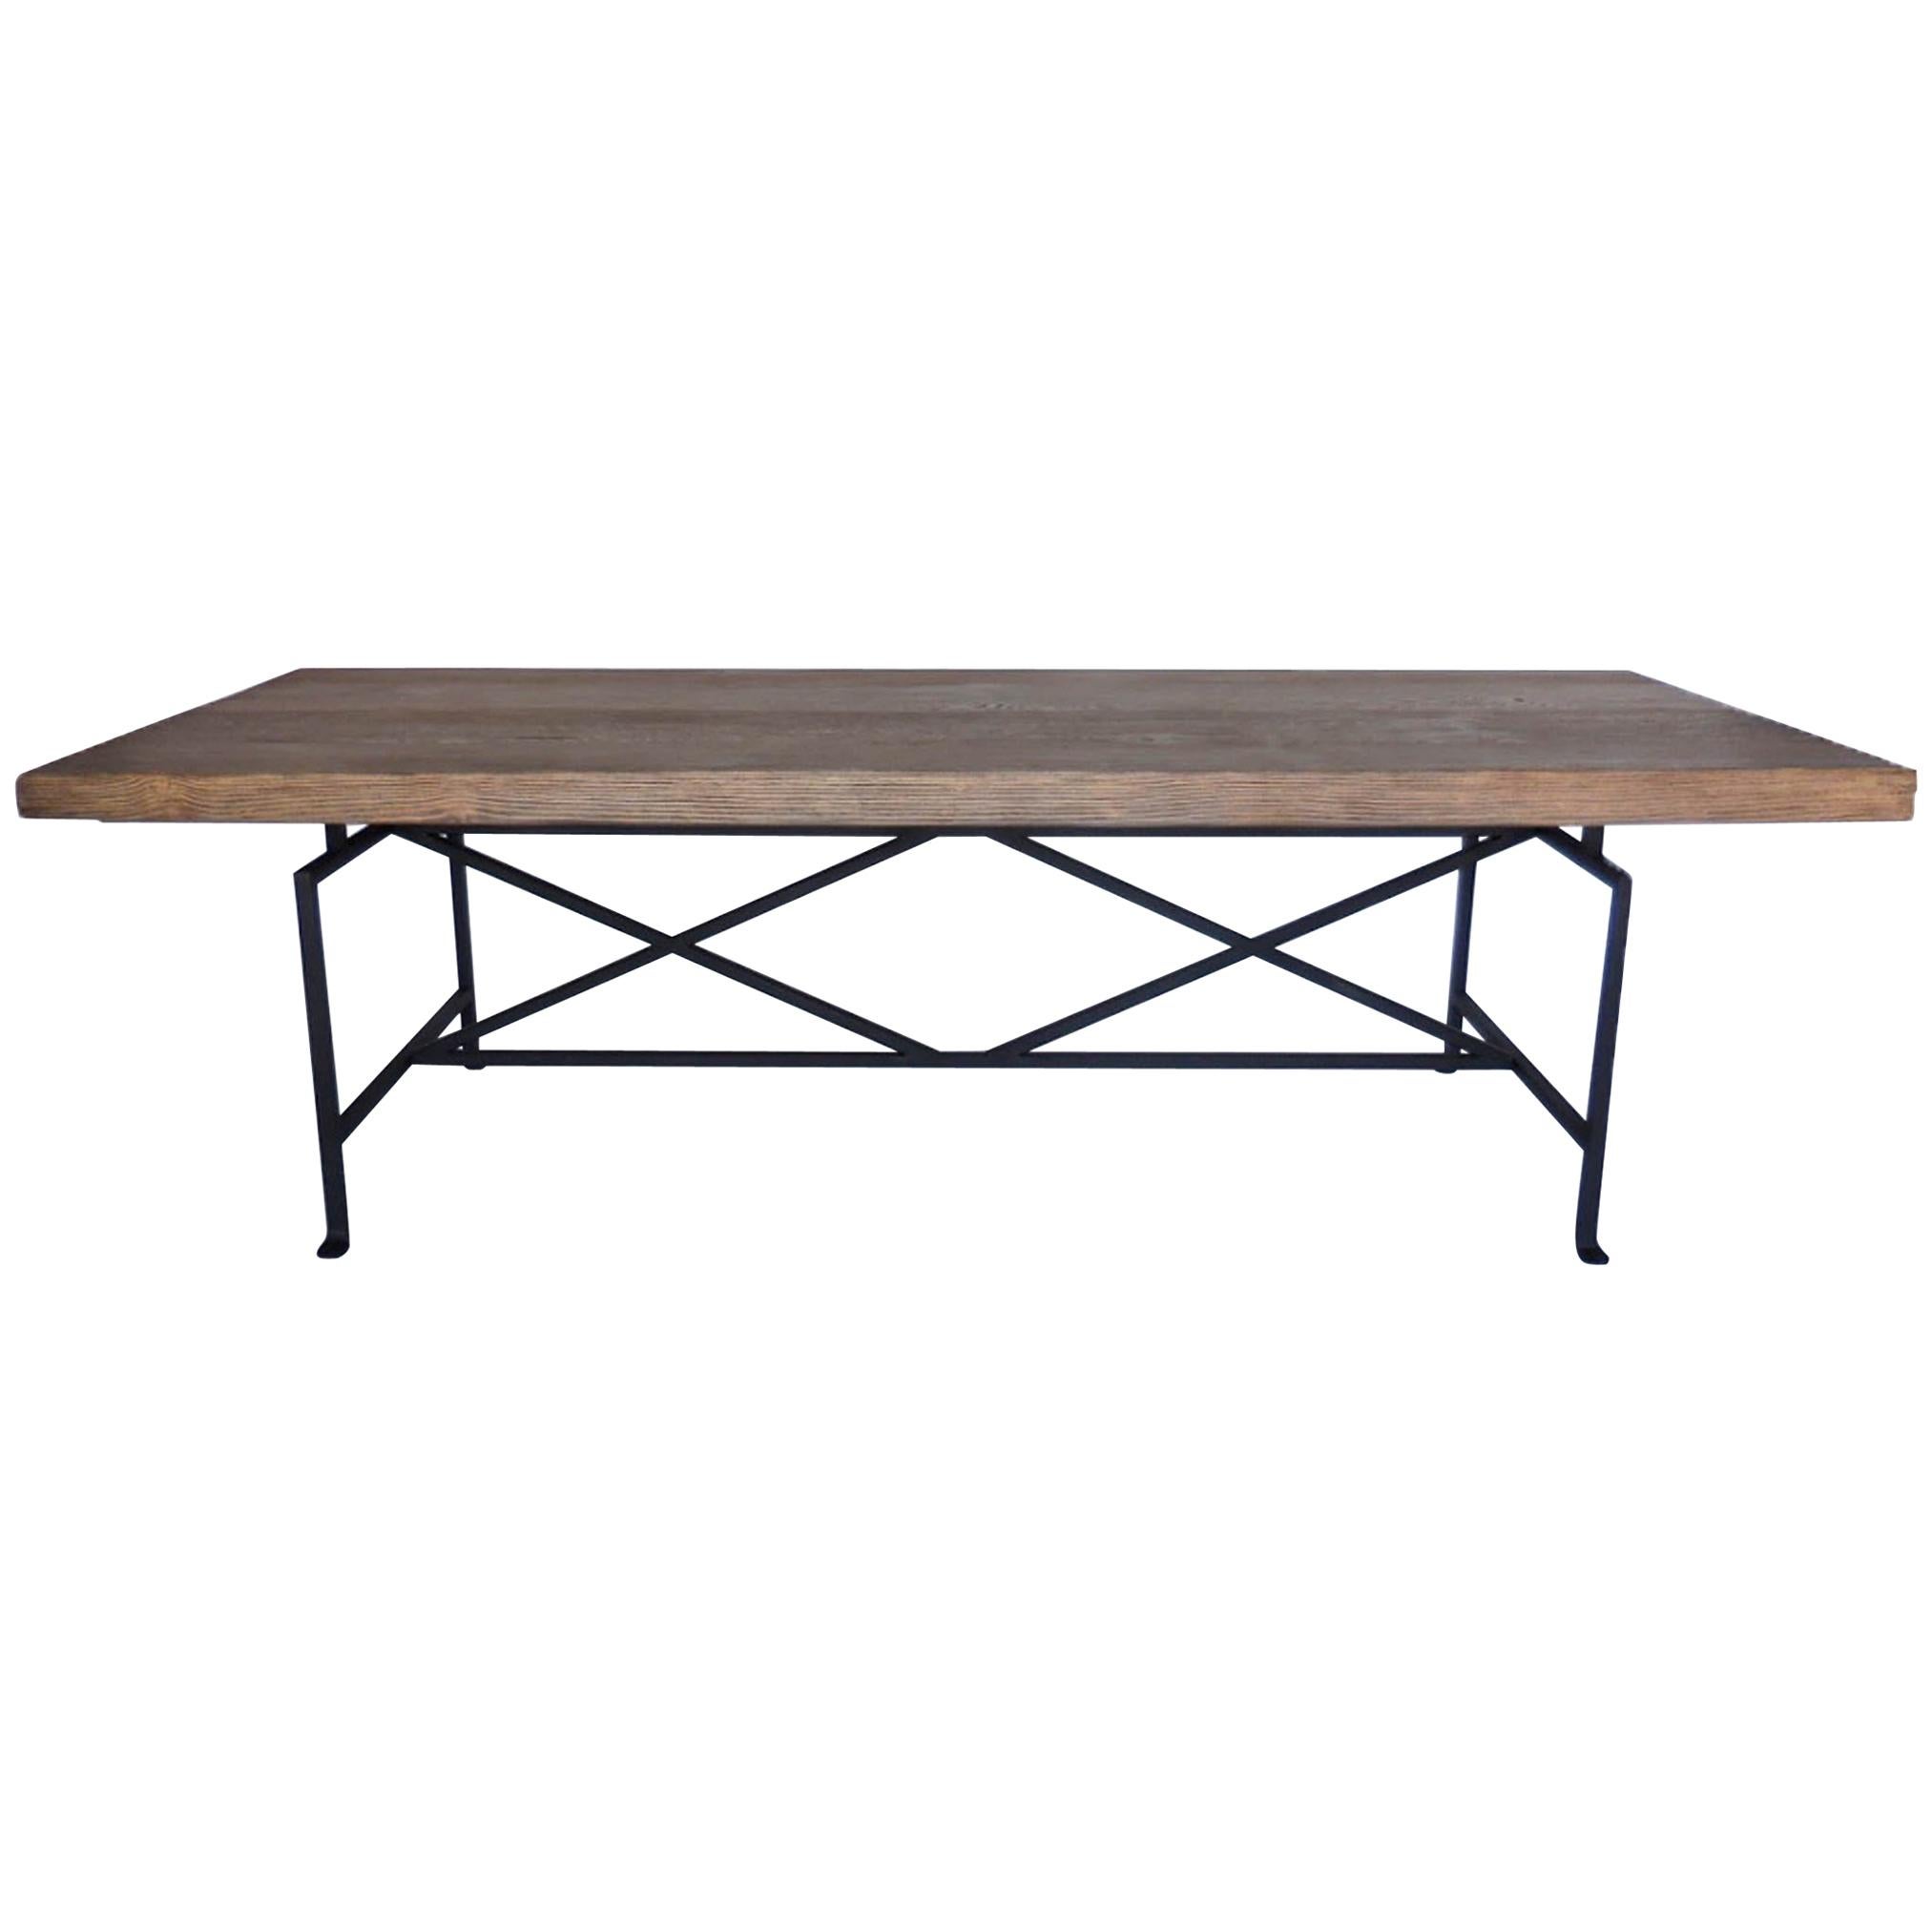 Custom Reclaimed Wood Table with Iron Base